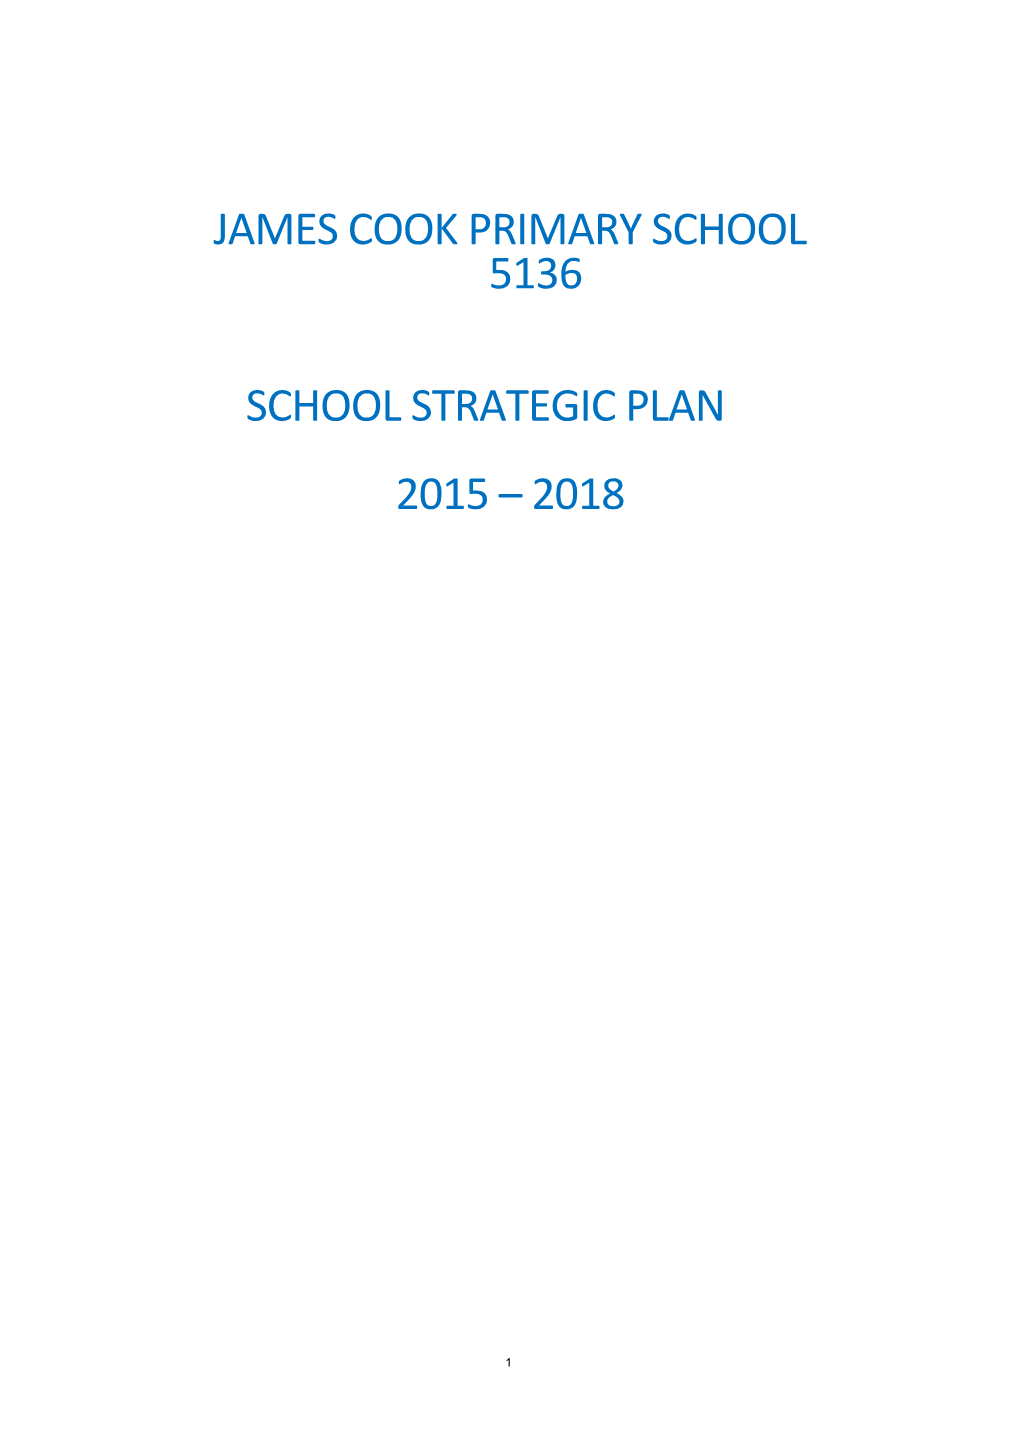 James Cook Primary School